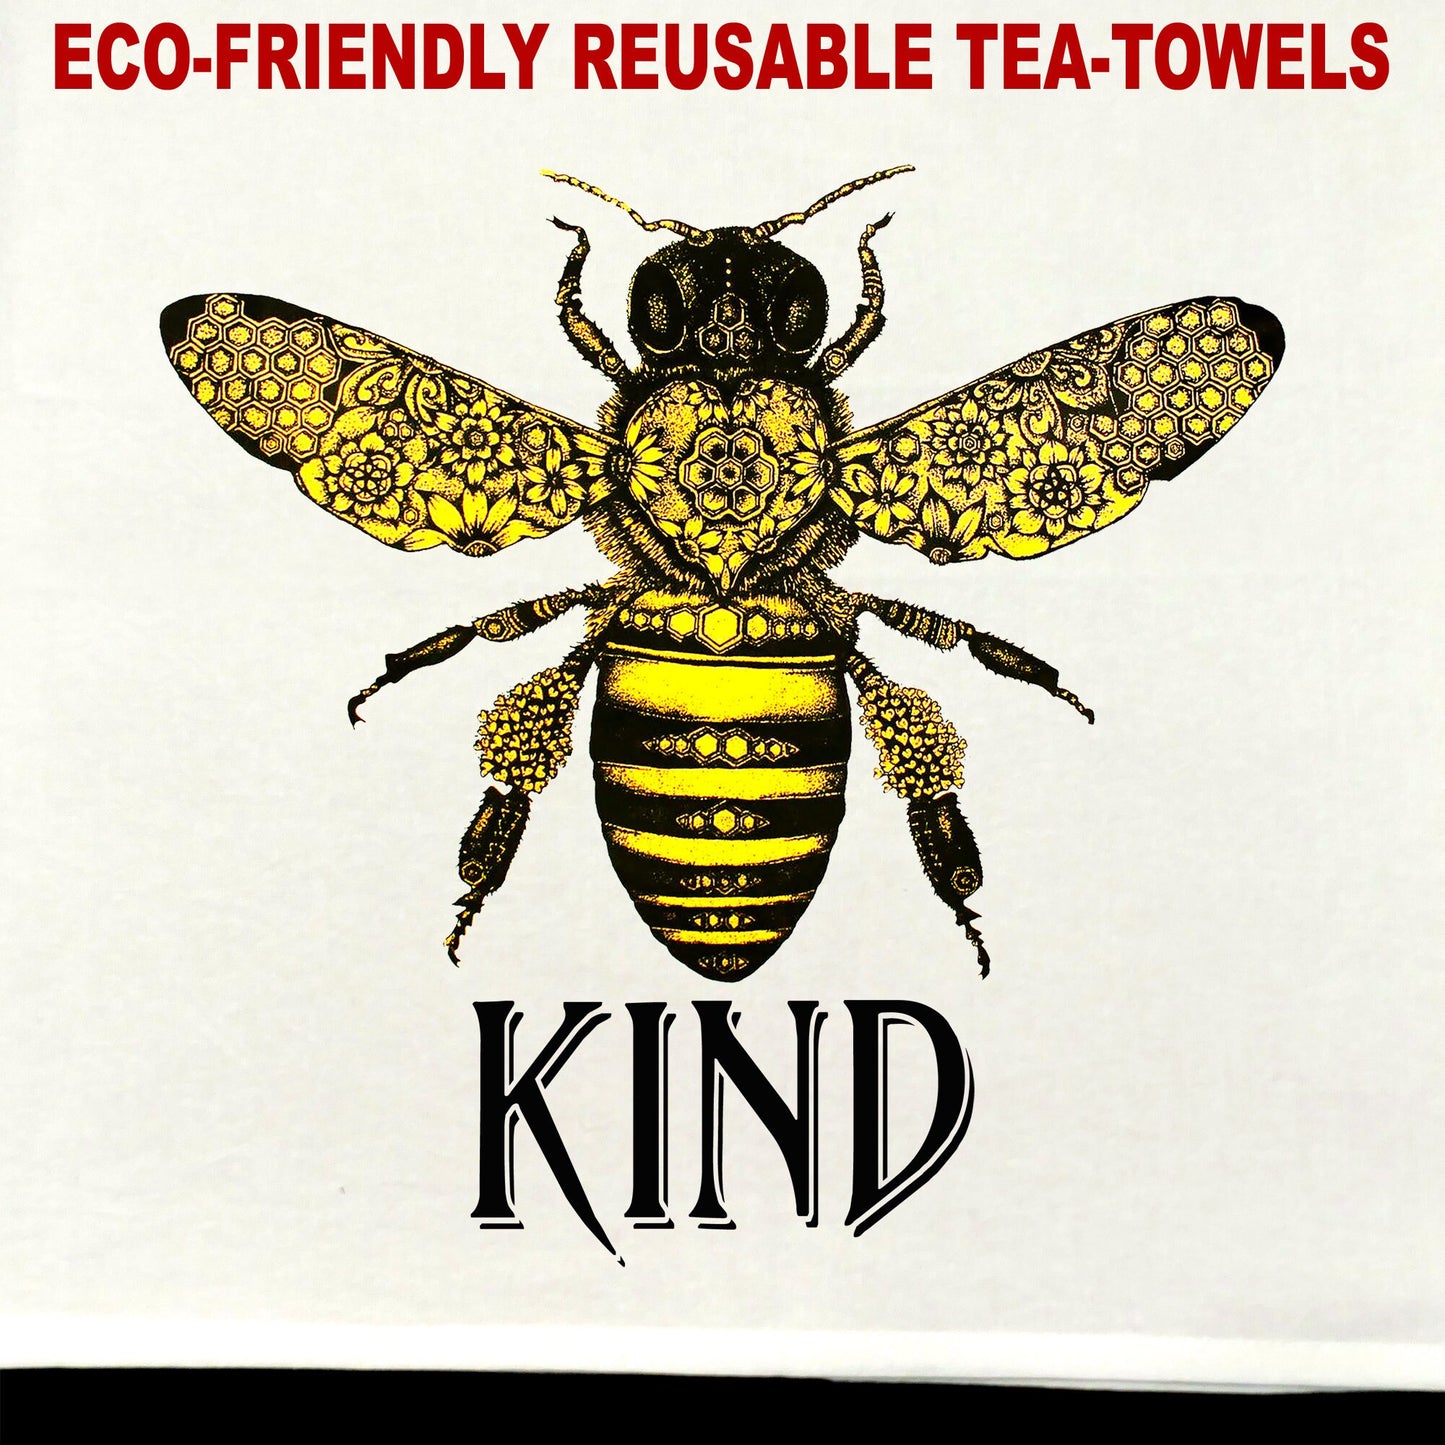 Bee Kind Tea Towel / tea towel / dish towel / hand towel / reusable wipe / kitchen gift / kitchen deco